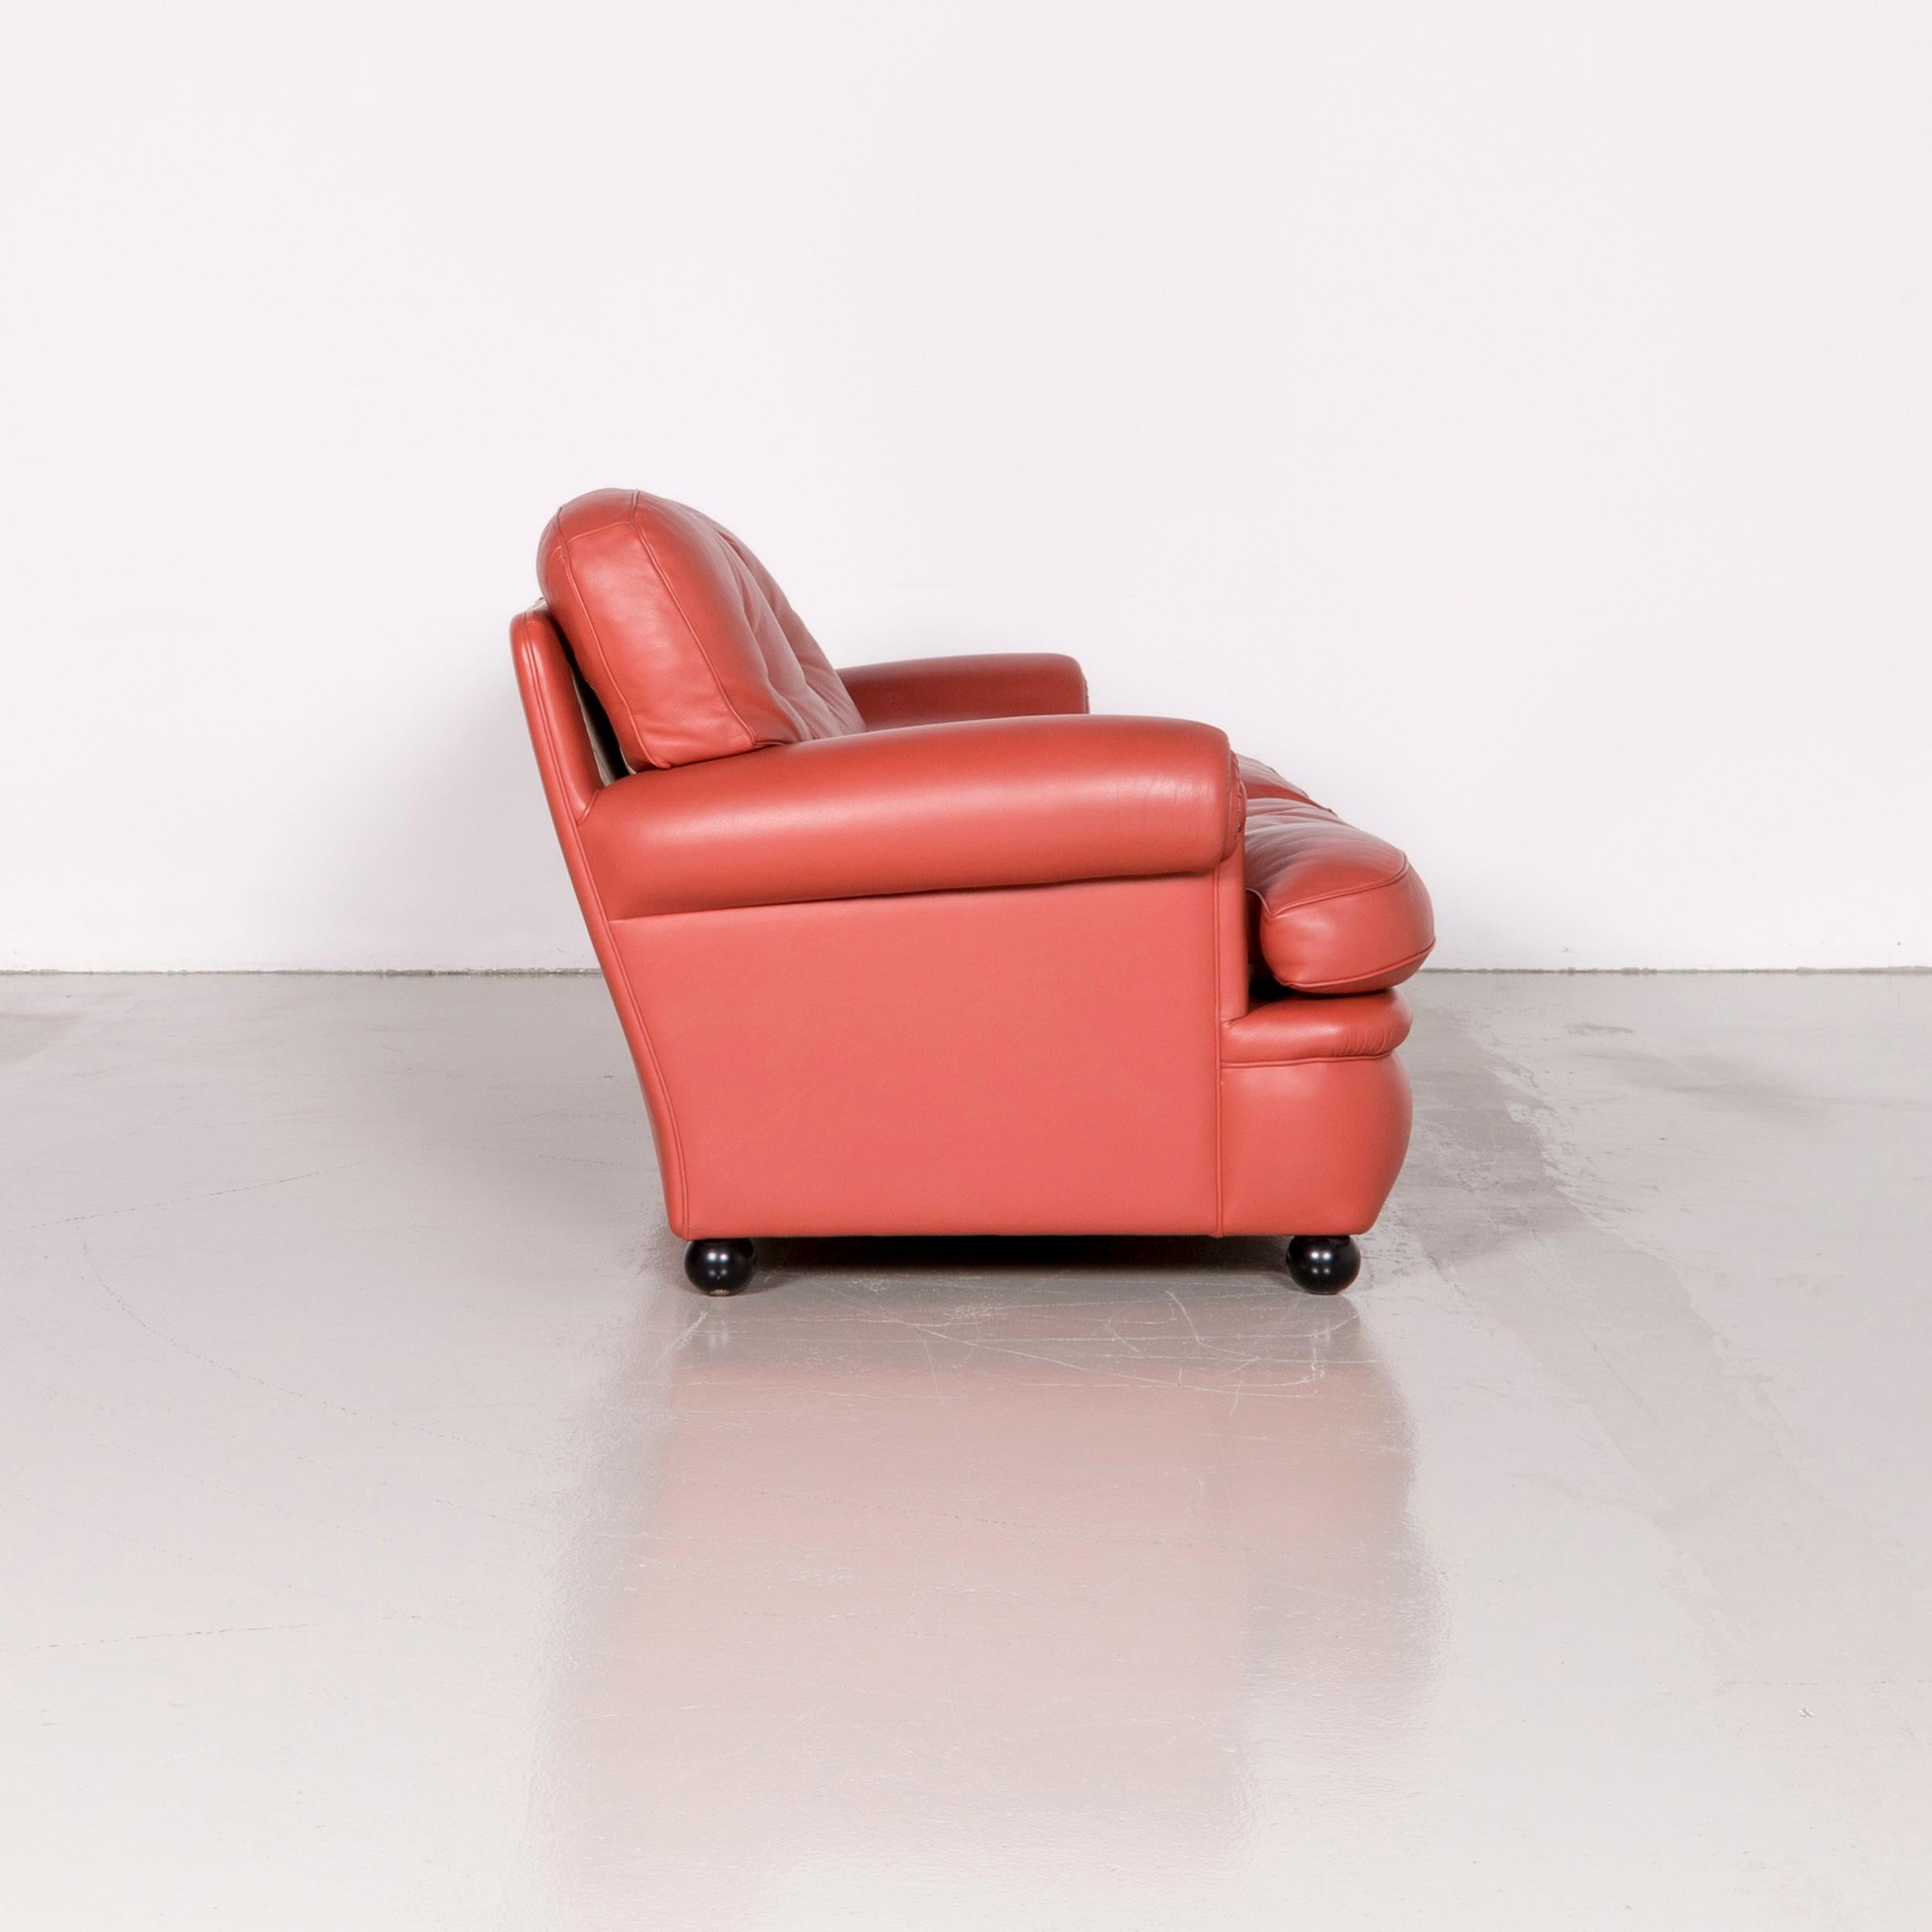 Poltrona Frau Dream on Designer Leather Two-Seat Couch Orange 5